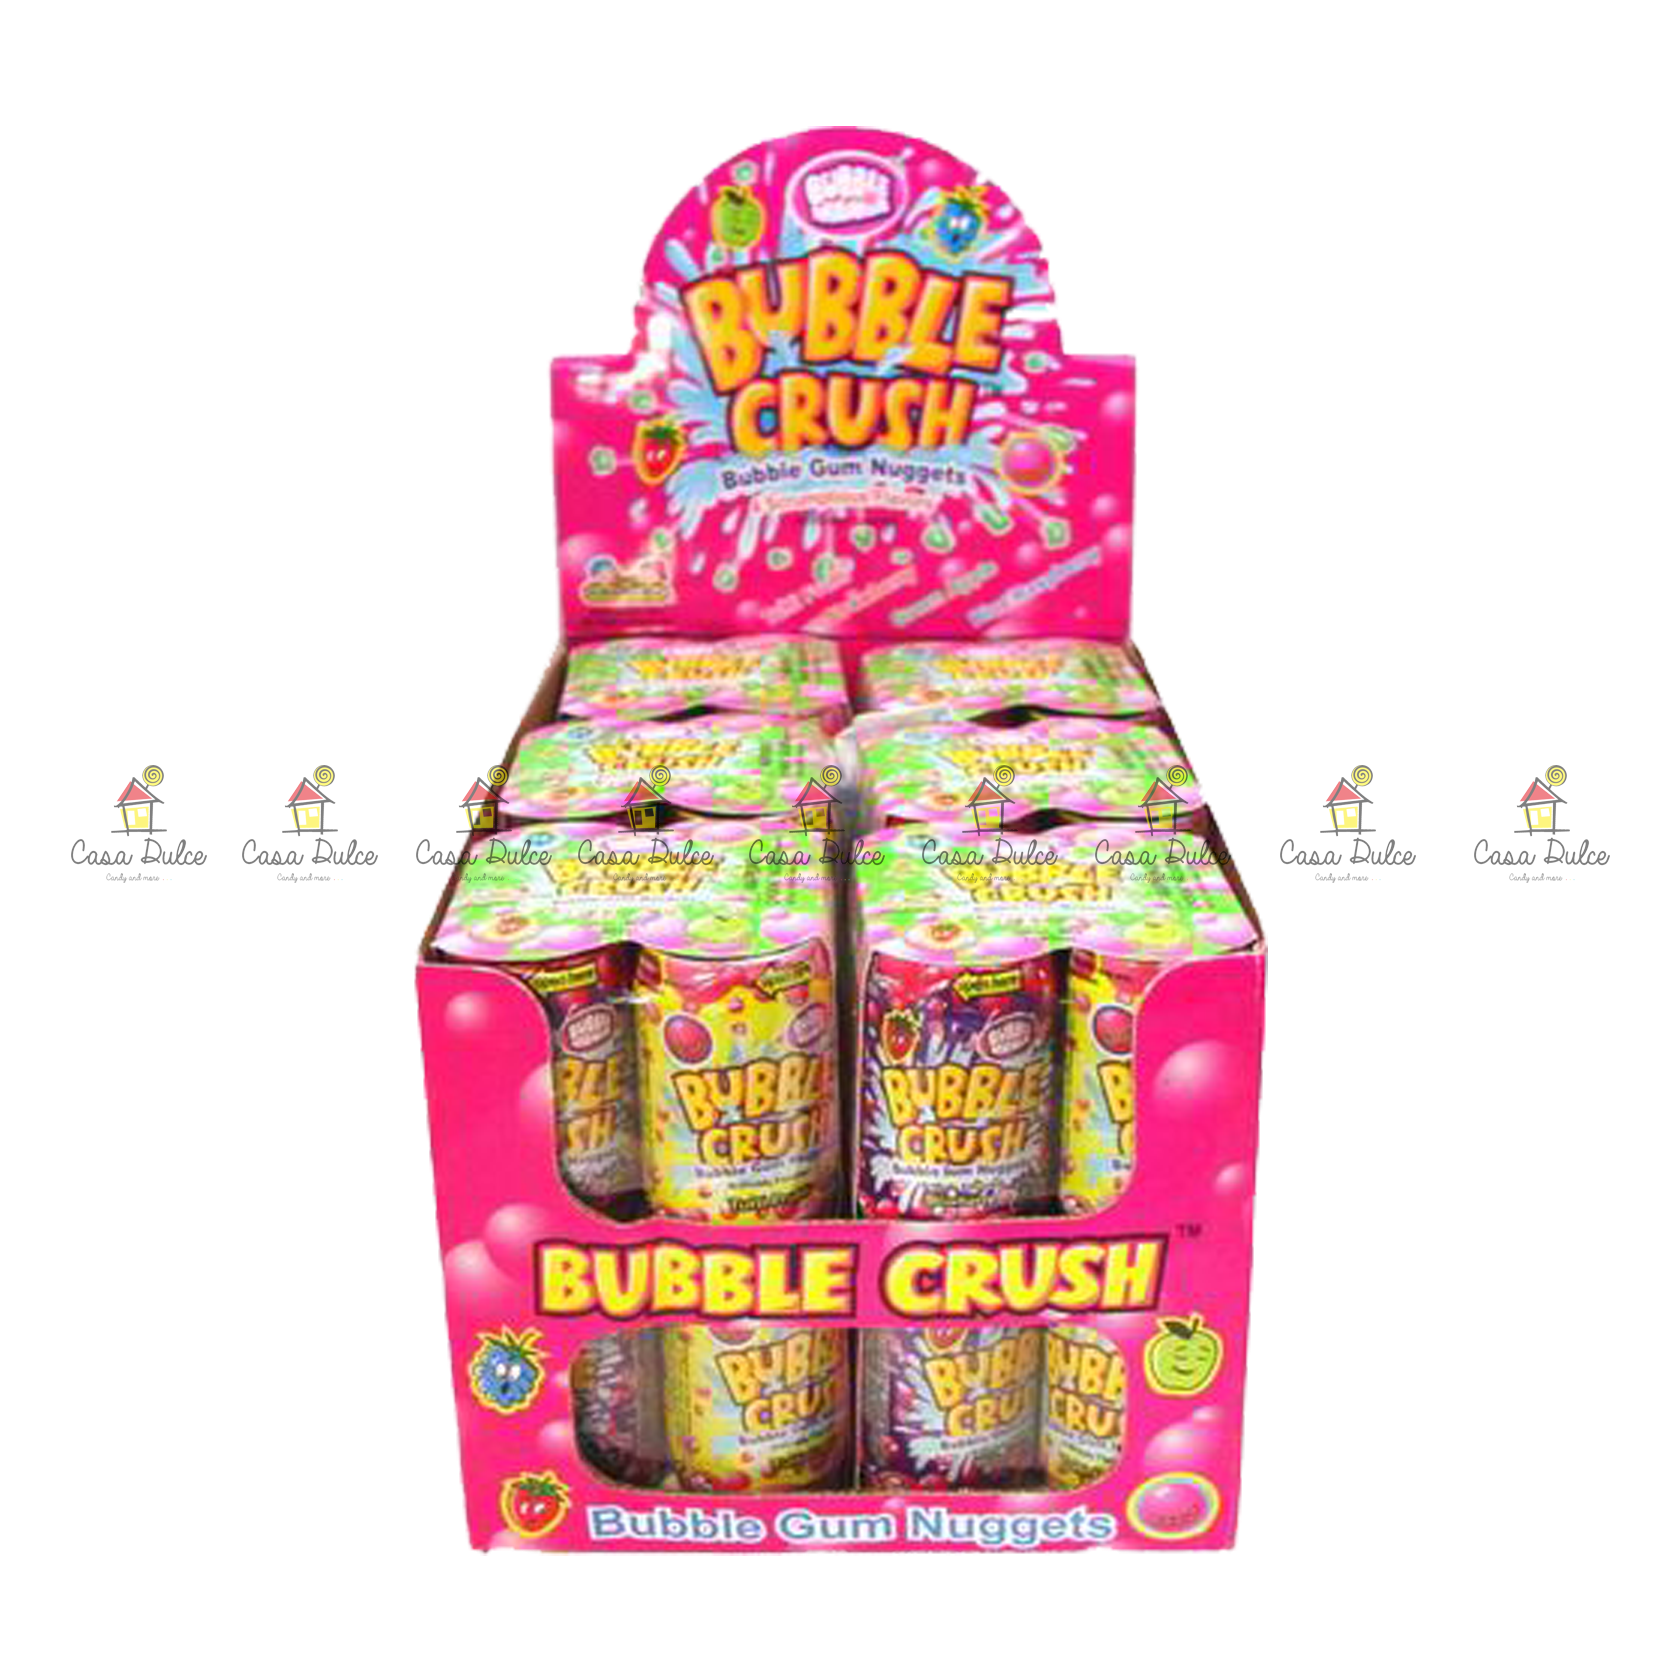 Bubble Crush